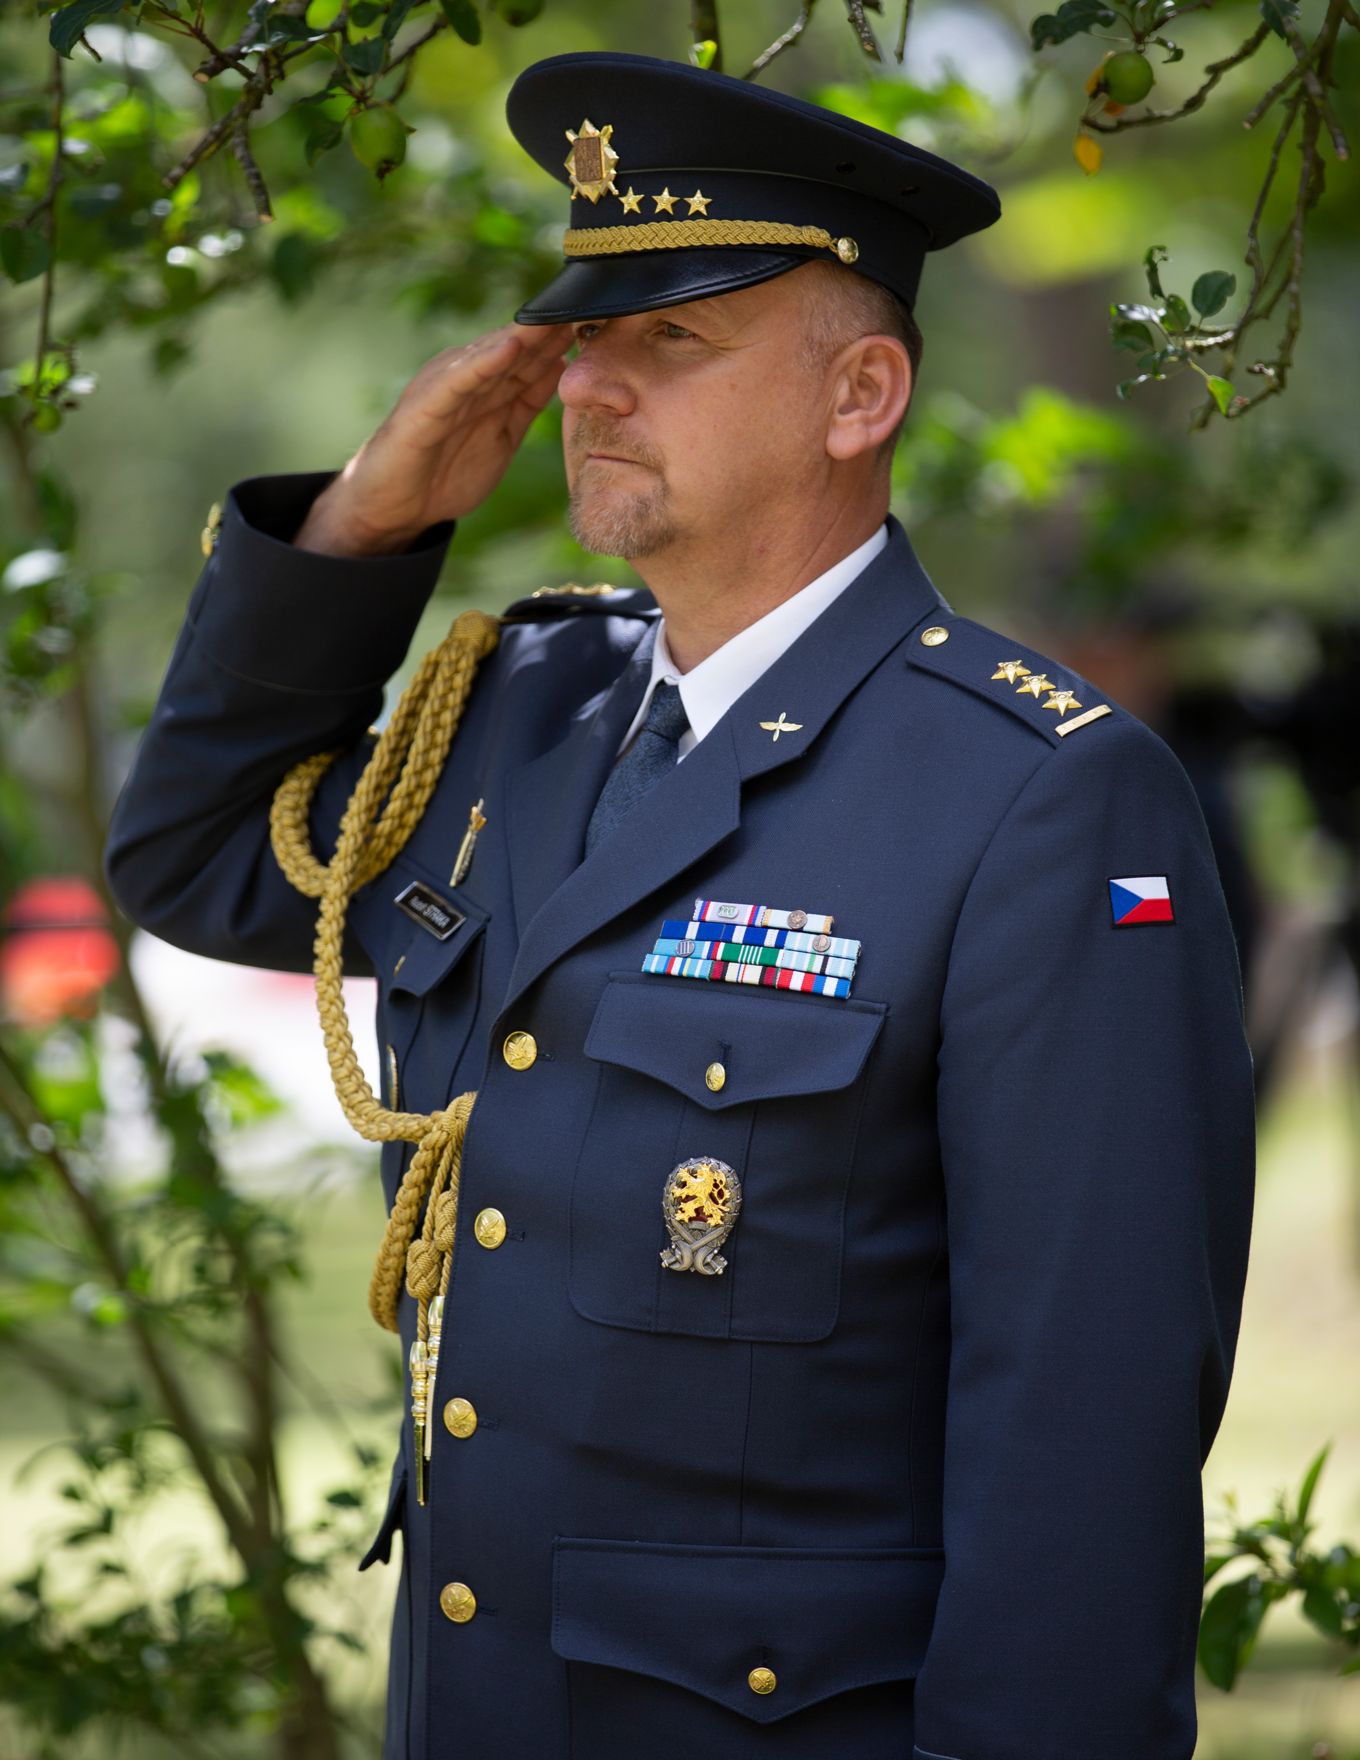 Col Gen Staff Straka takes the salute